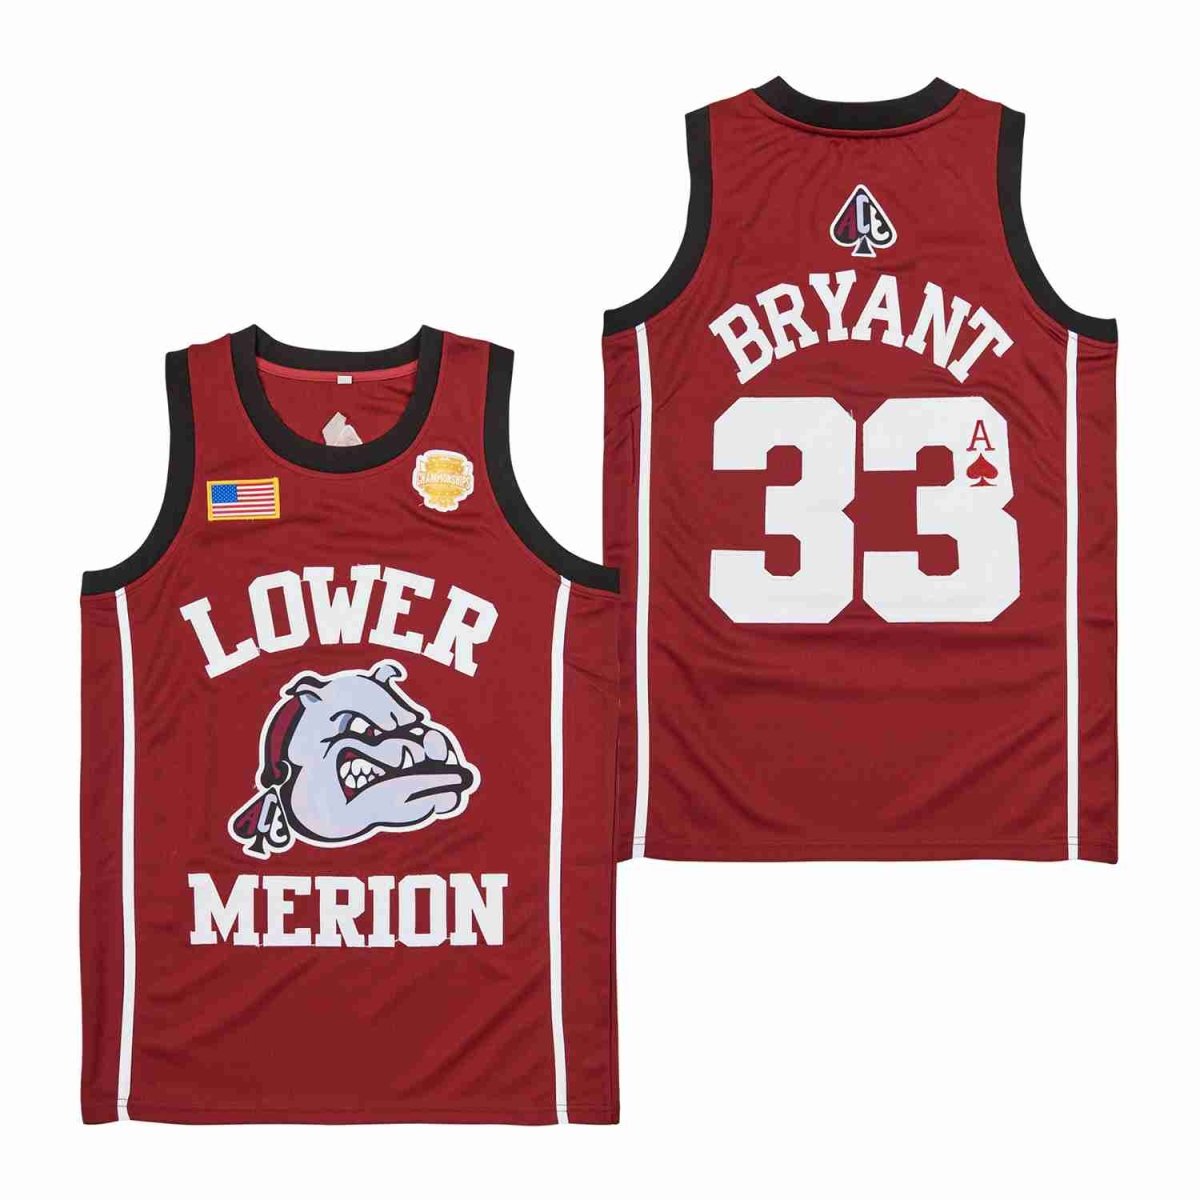 Kobe Bryant #33 Lower Merion Limited Edition Jersey – unlimitedsportshop